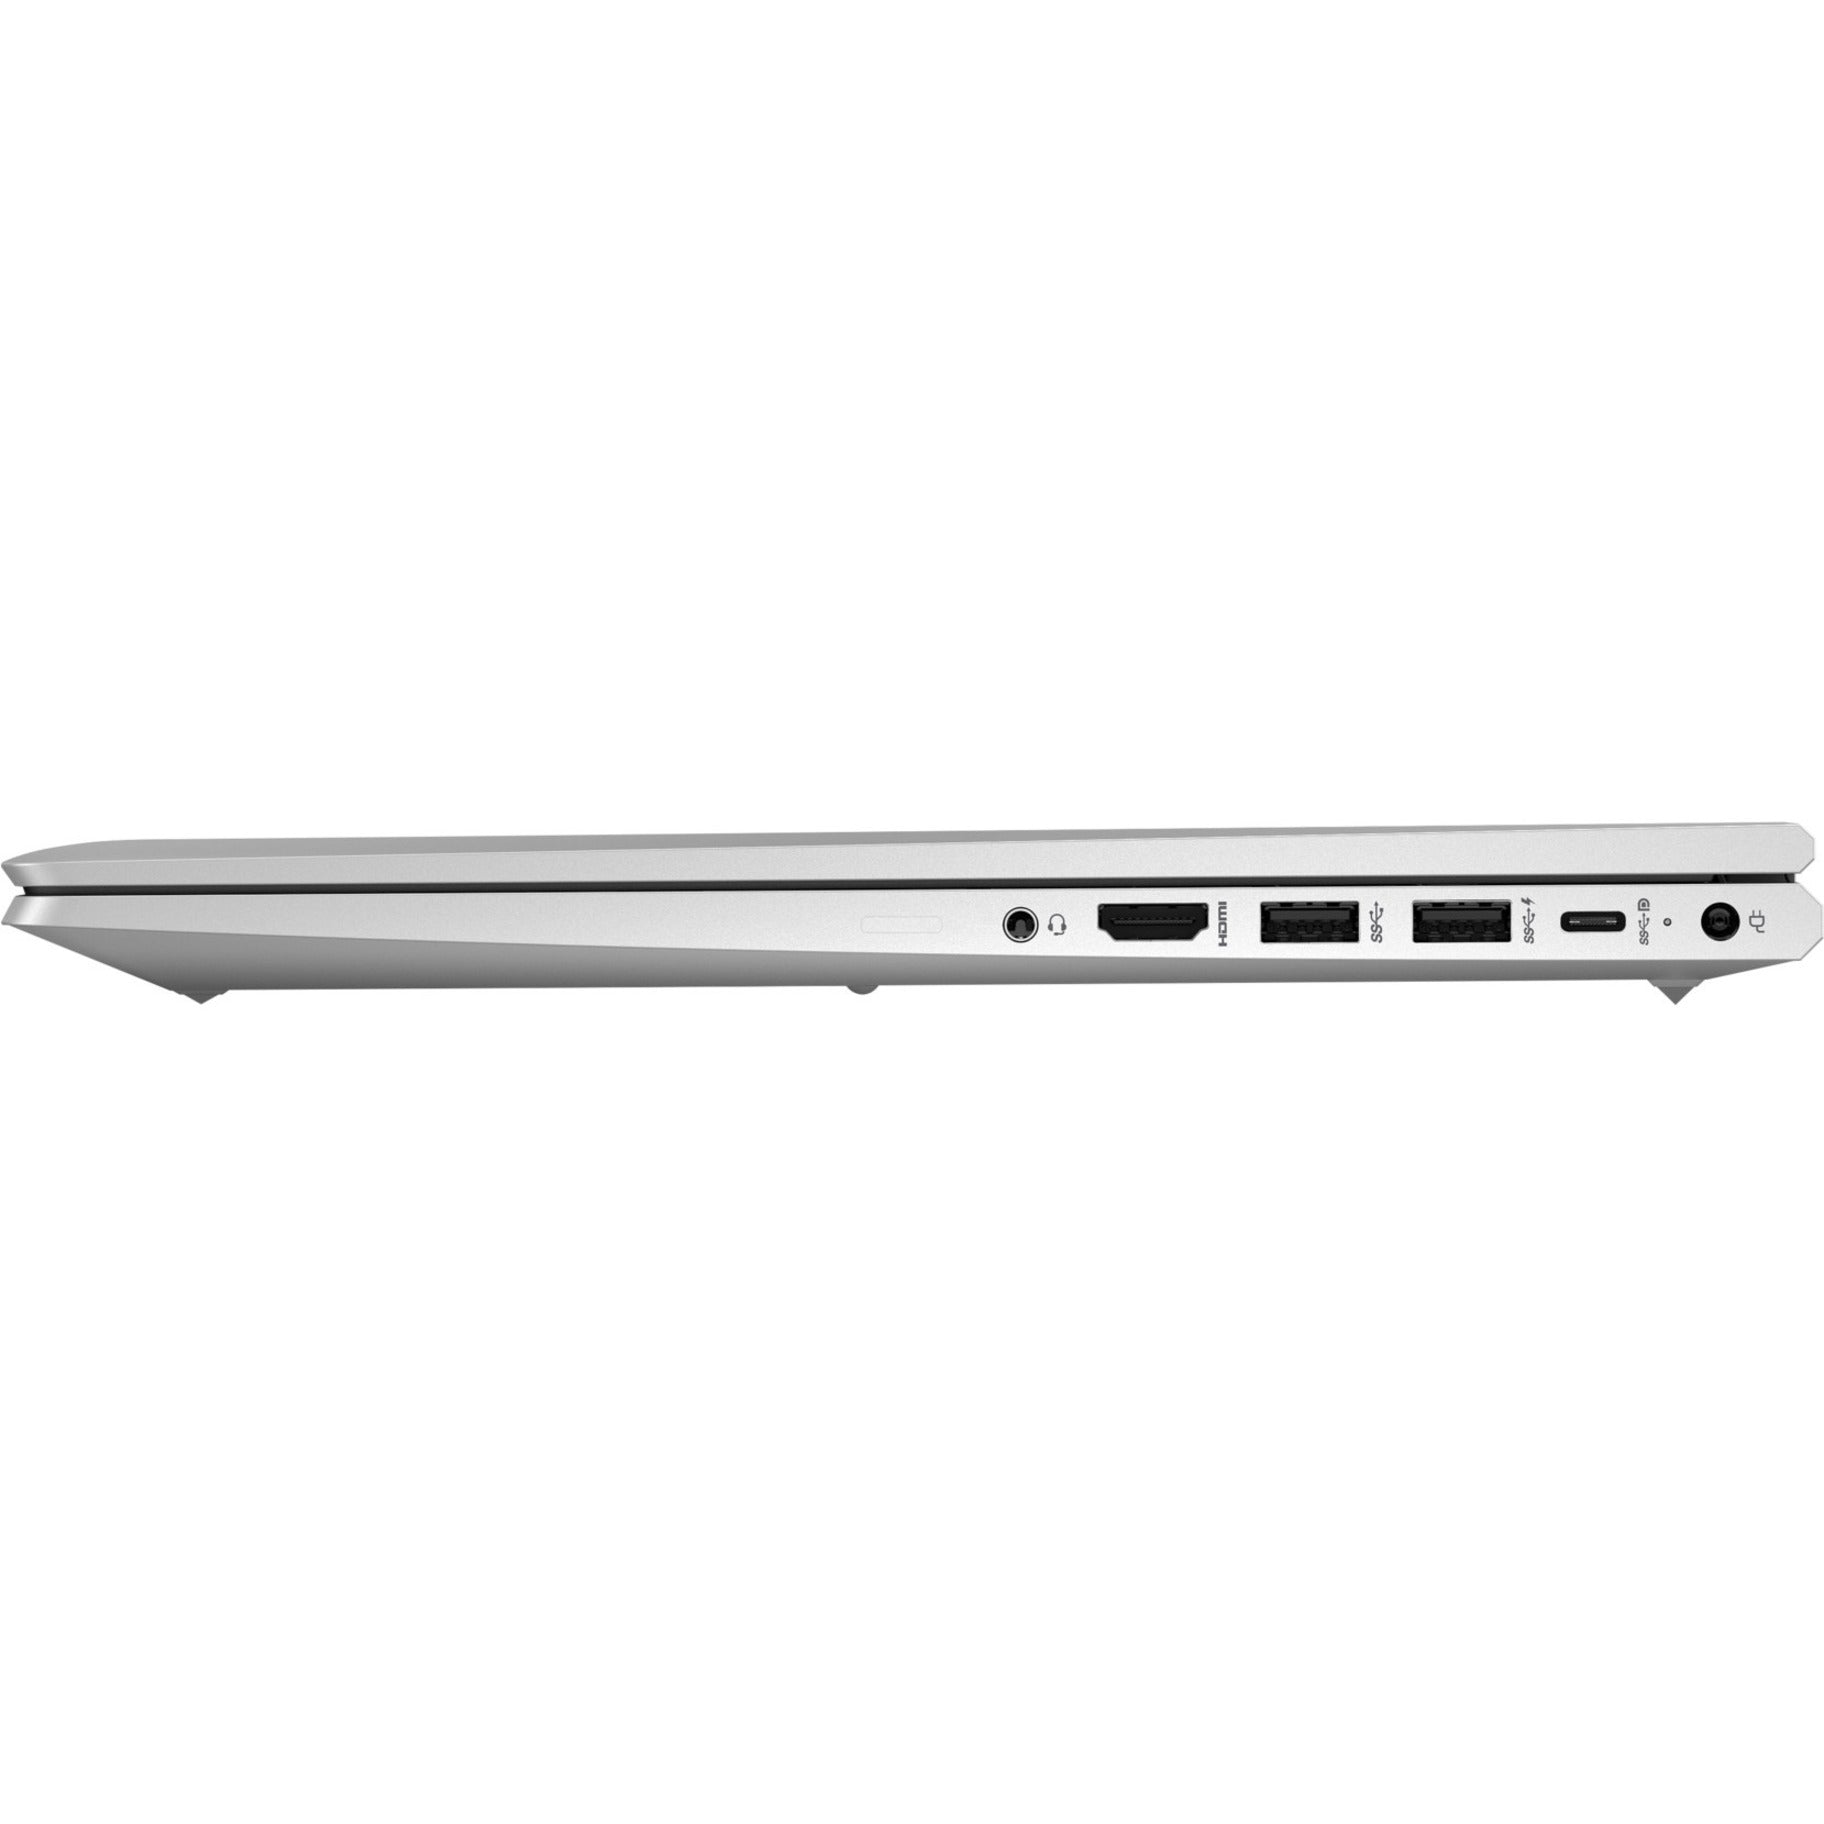 HP 687N8UT ProBook 450 G9 15.6" Notebook, Intel Core i5 12th Gen, 8GB RAM, 256GB SSD, Windows 11 Pro